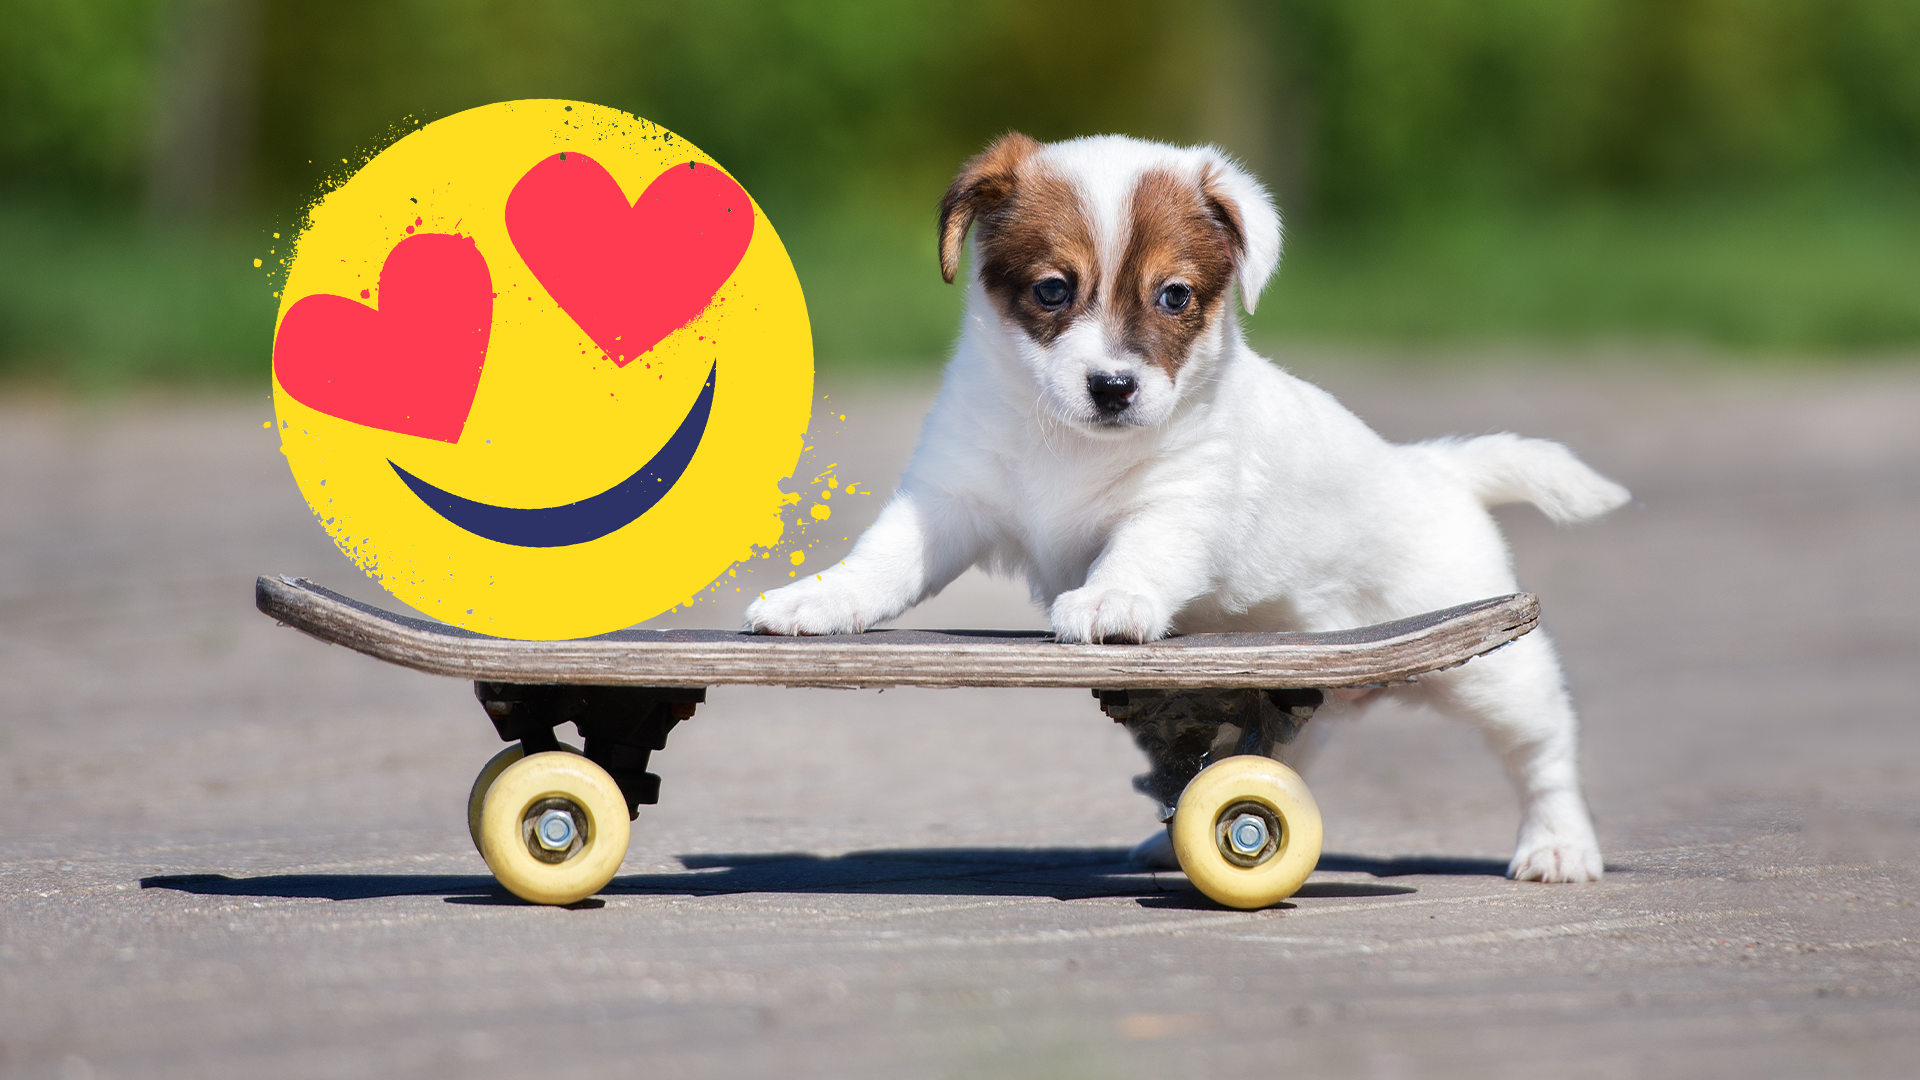 Puppy on skateboard with emoji 